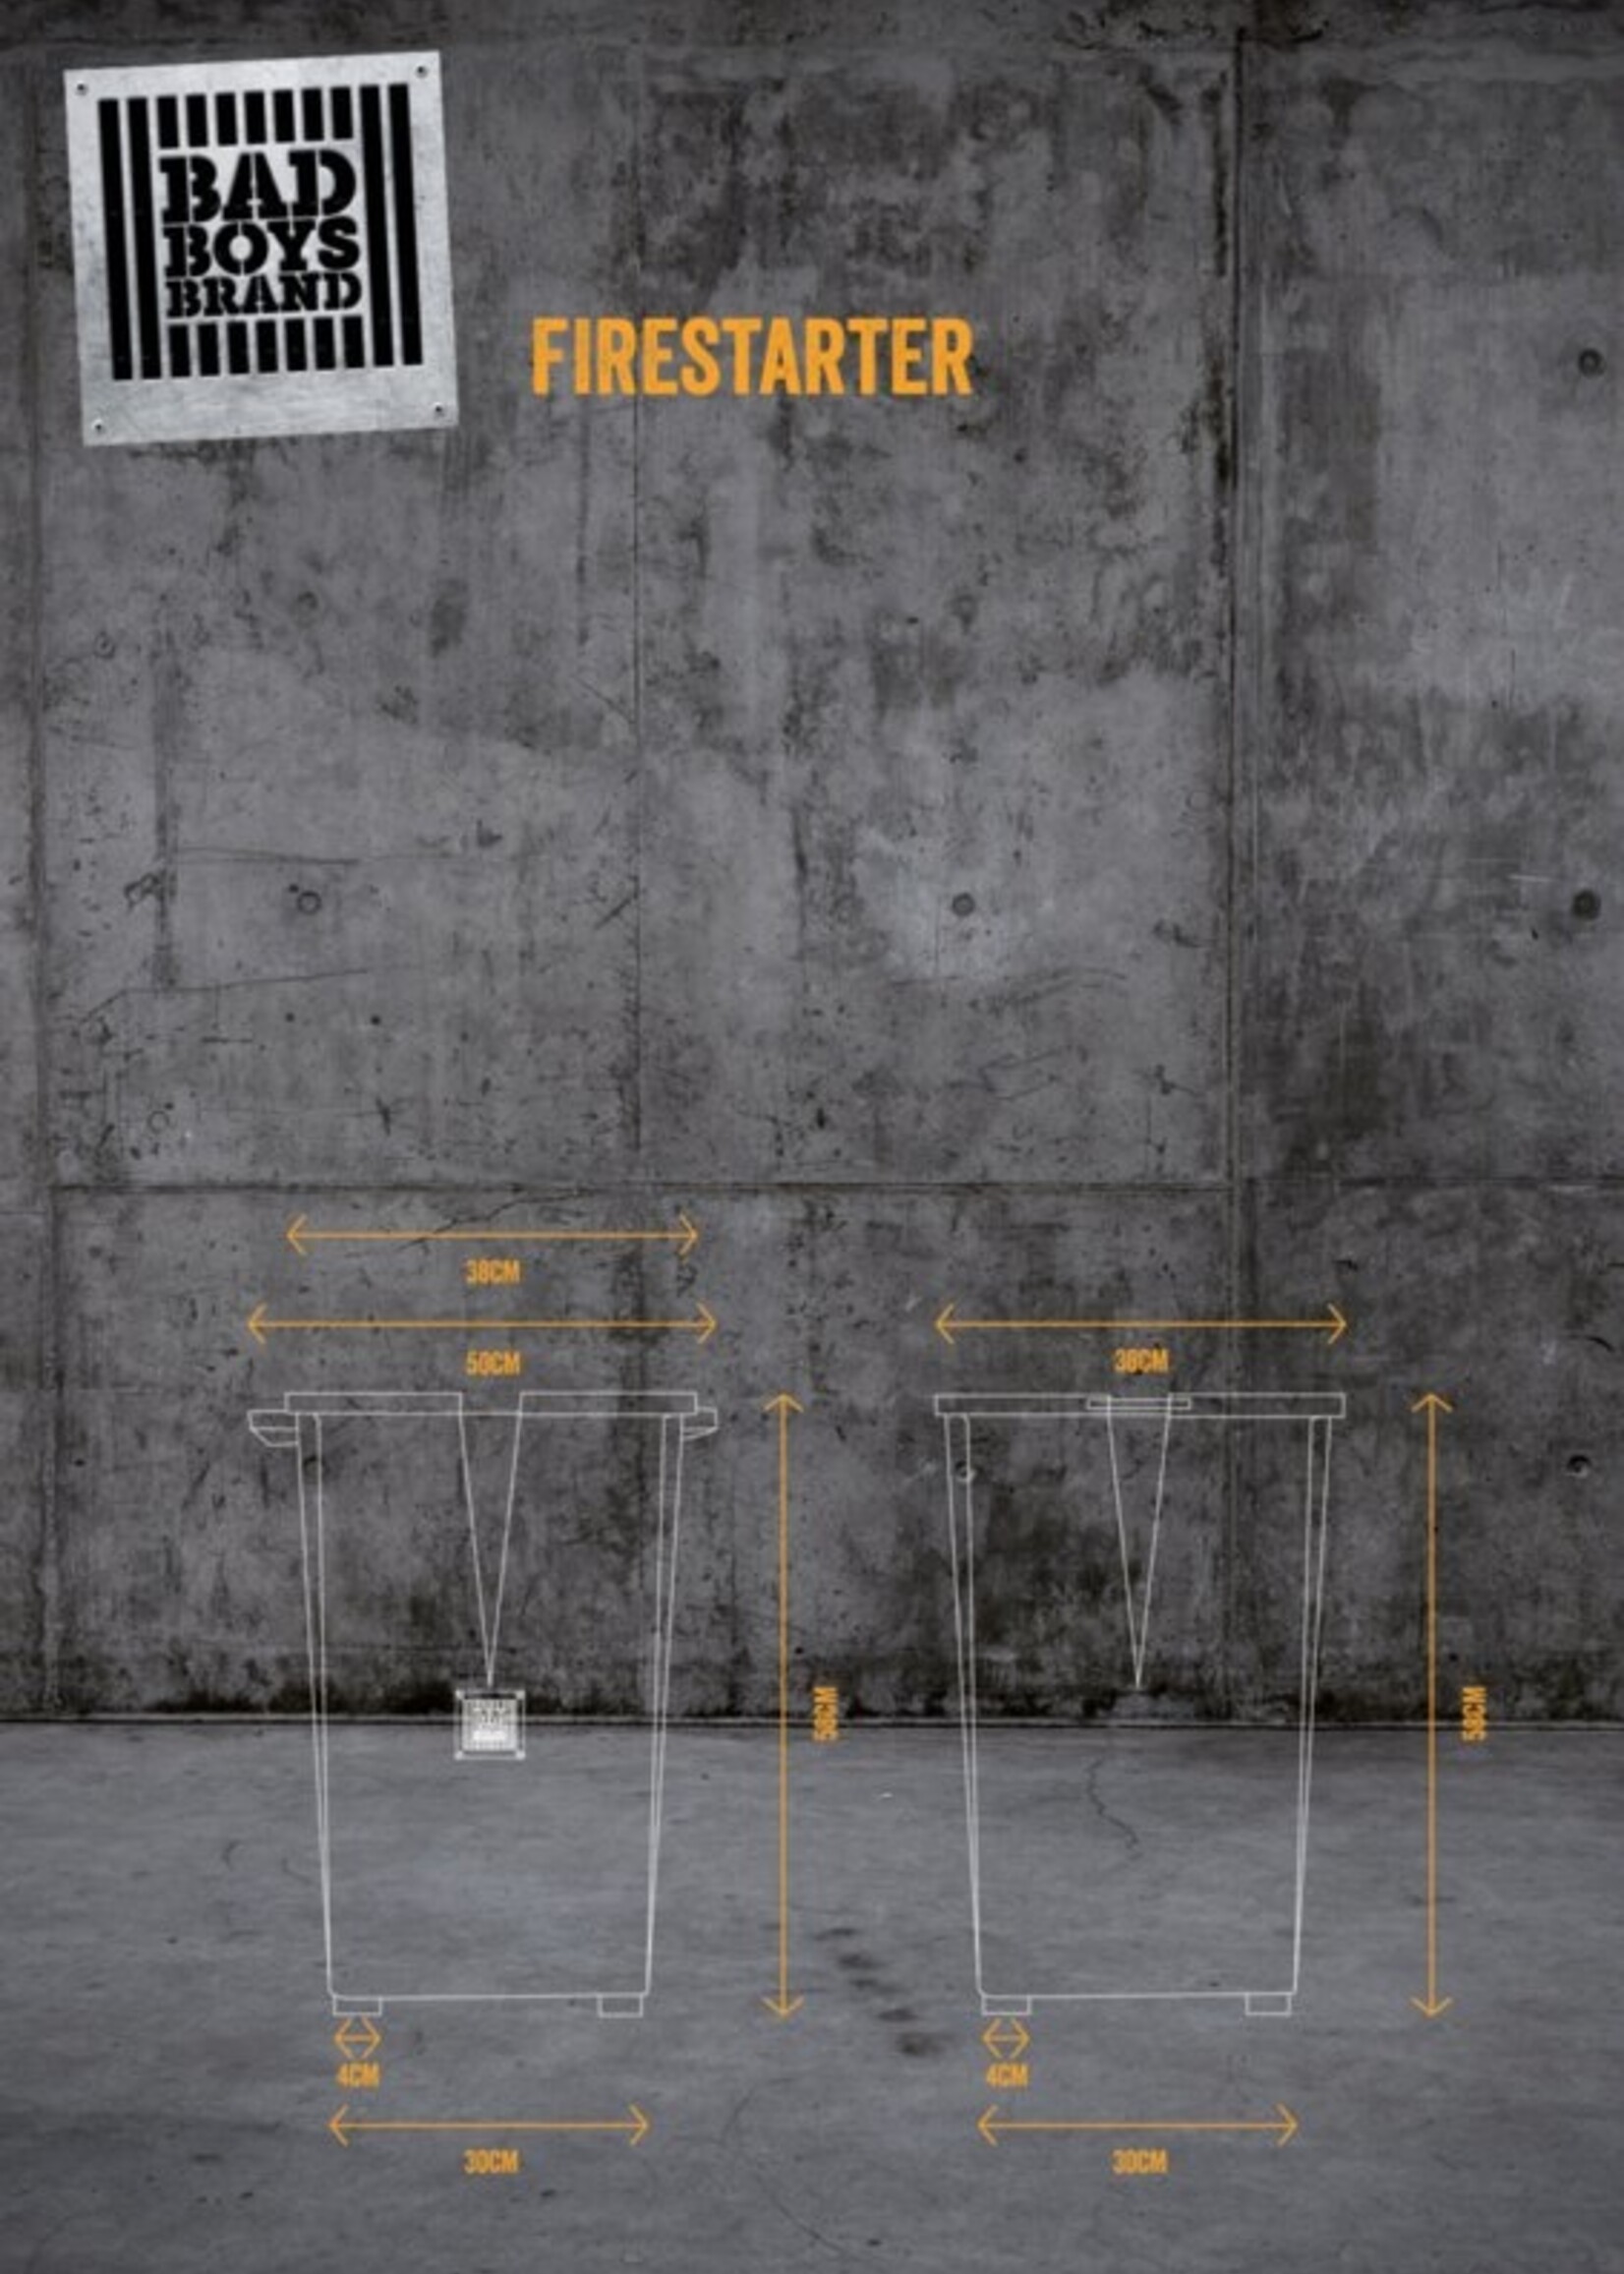 Bad Boys Brand Firestarter - vuurkorf 12 KG - BadBoysBrand - Staal - 100% Made in Jail